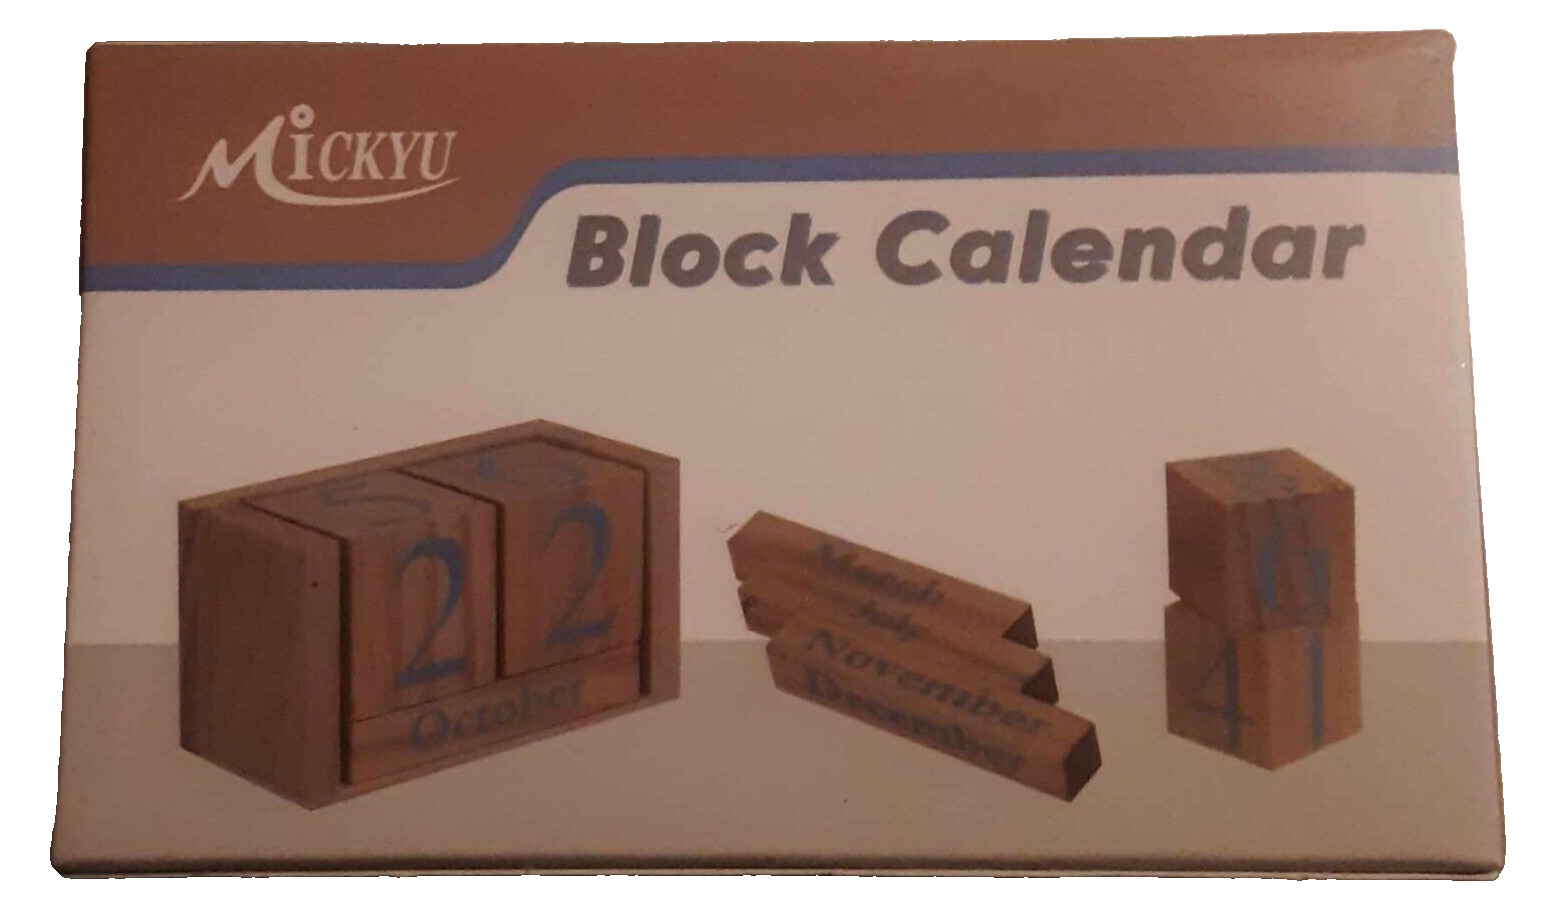 Block Calendar, Solid Wood, by Mickyu